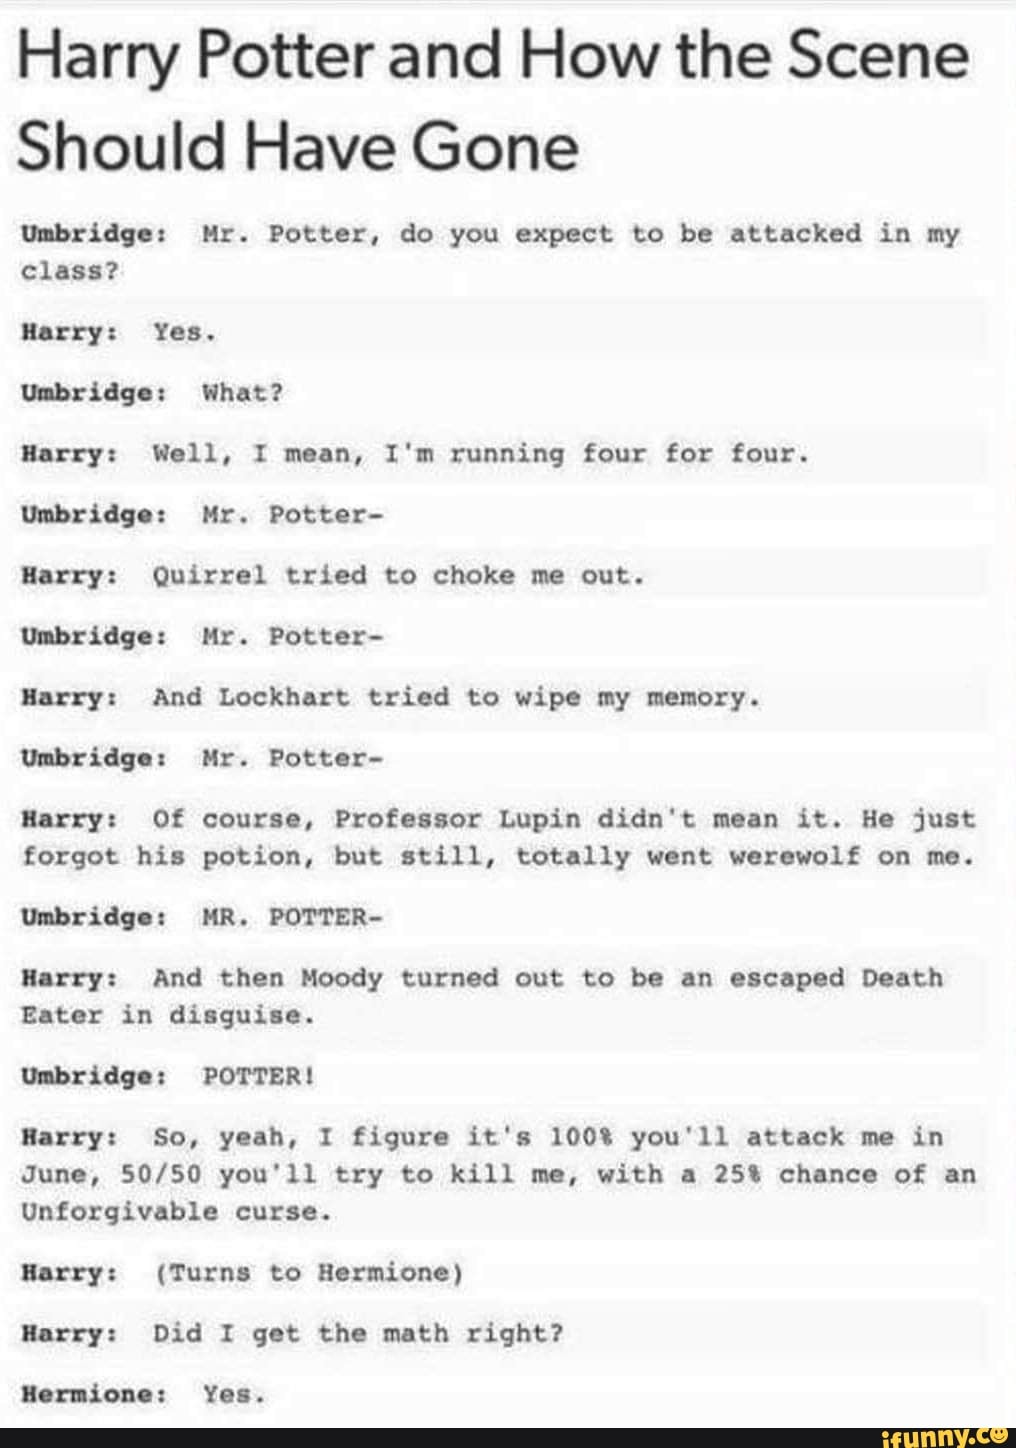 Memes - Harry Potter - Filmes - Hary Potter - Página 6 - Criarmeme